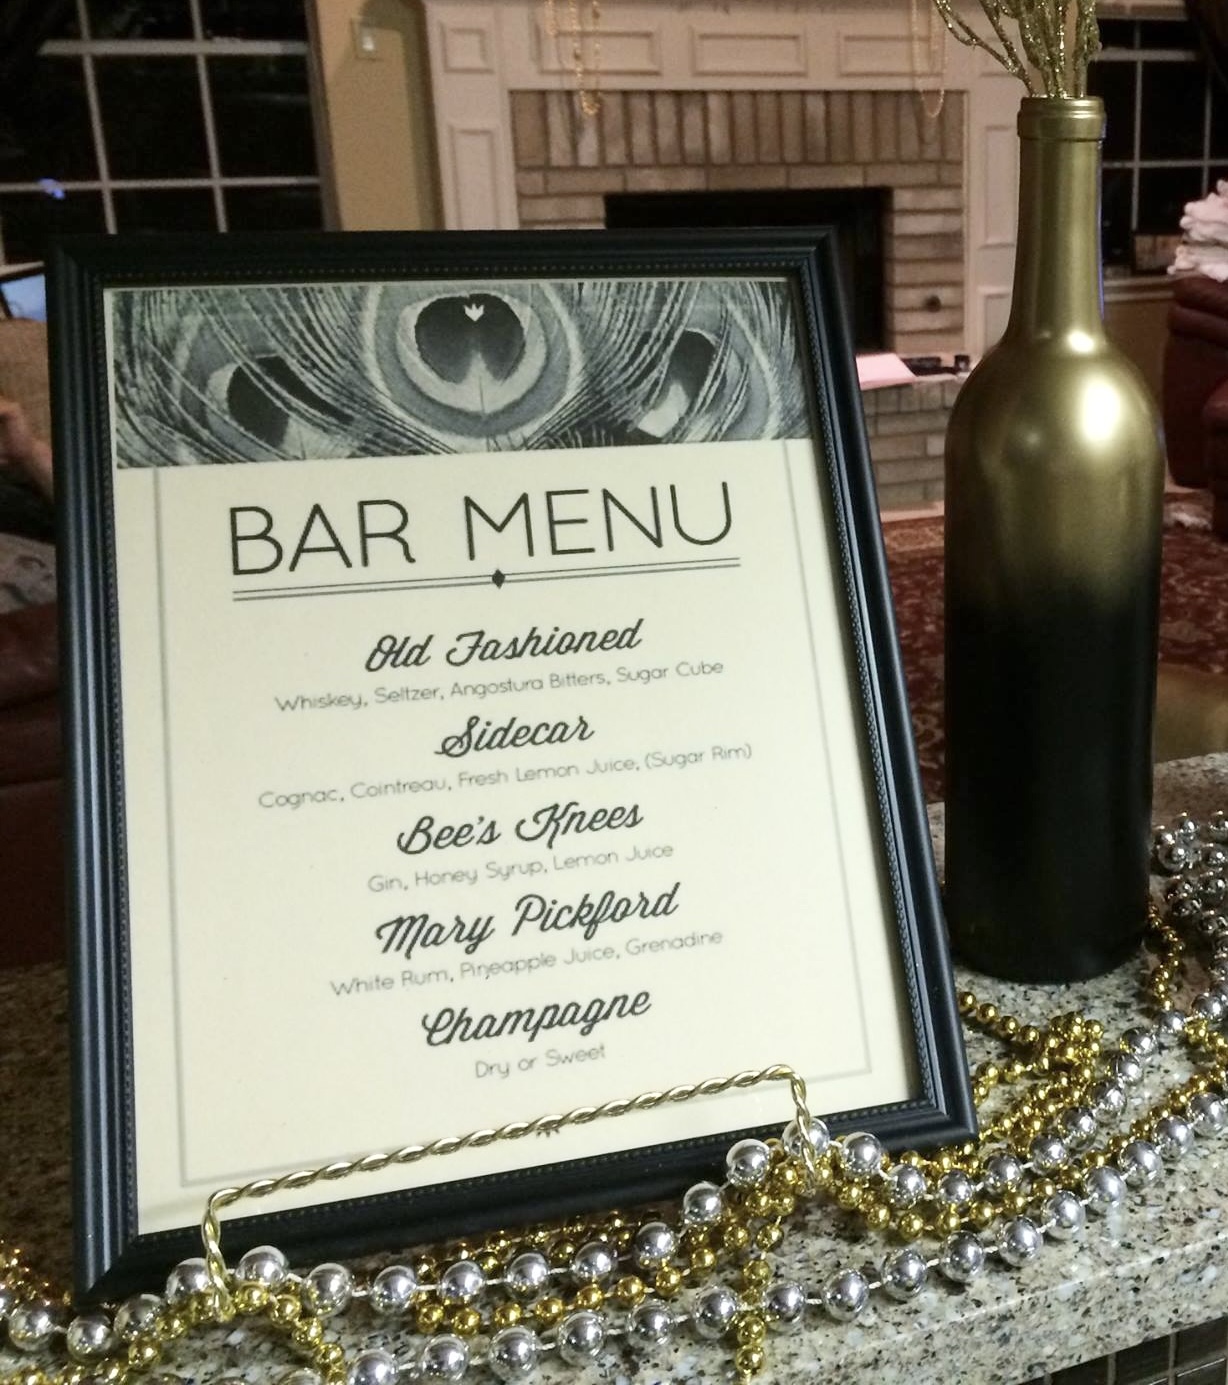 A bar menu for 1920s era drinks